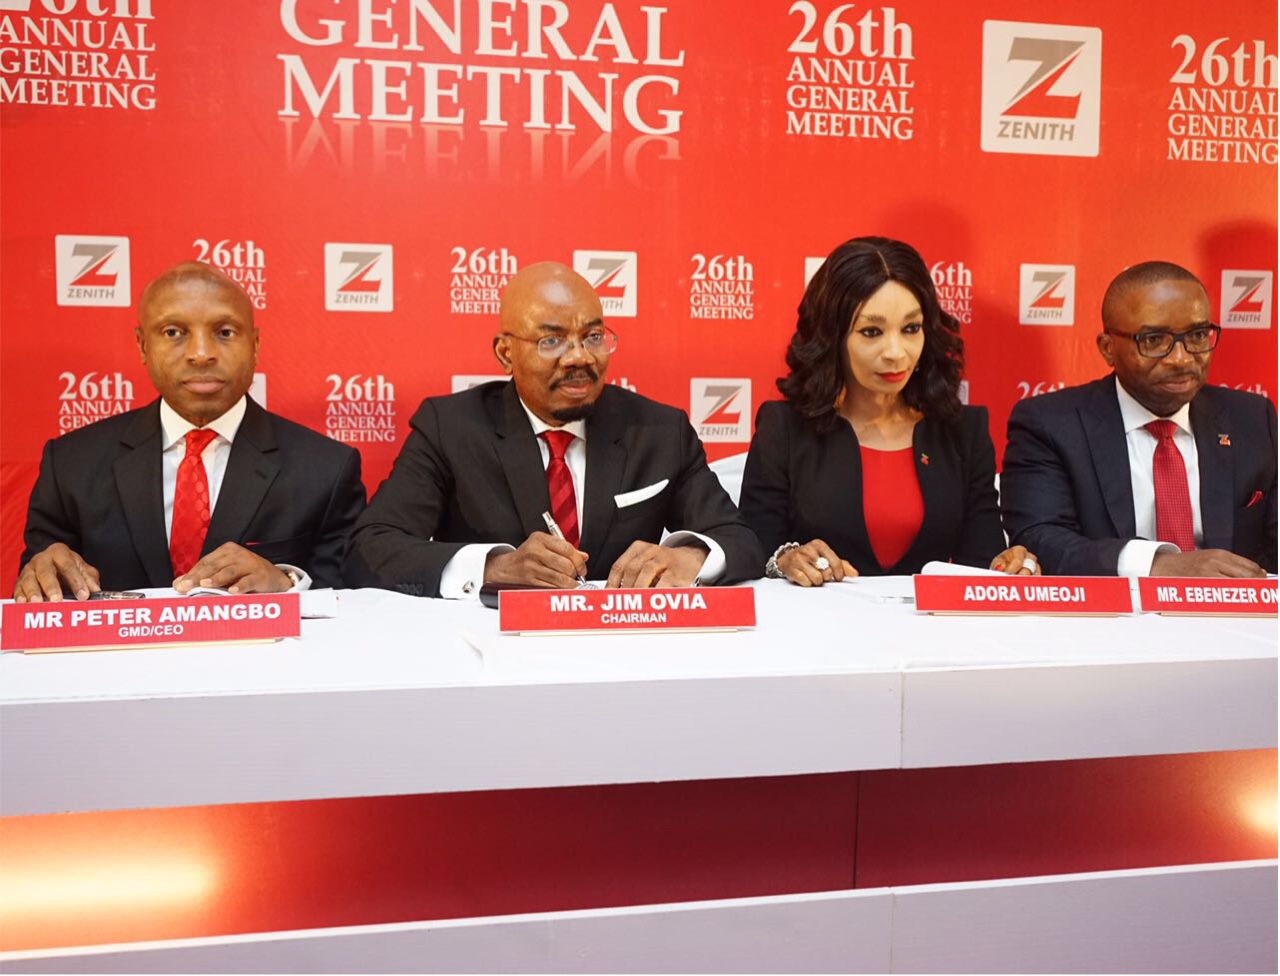 Zenith Bank declares N15.70bn as interim dividend to shareholders